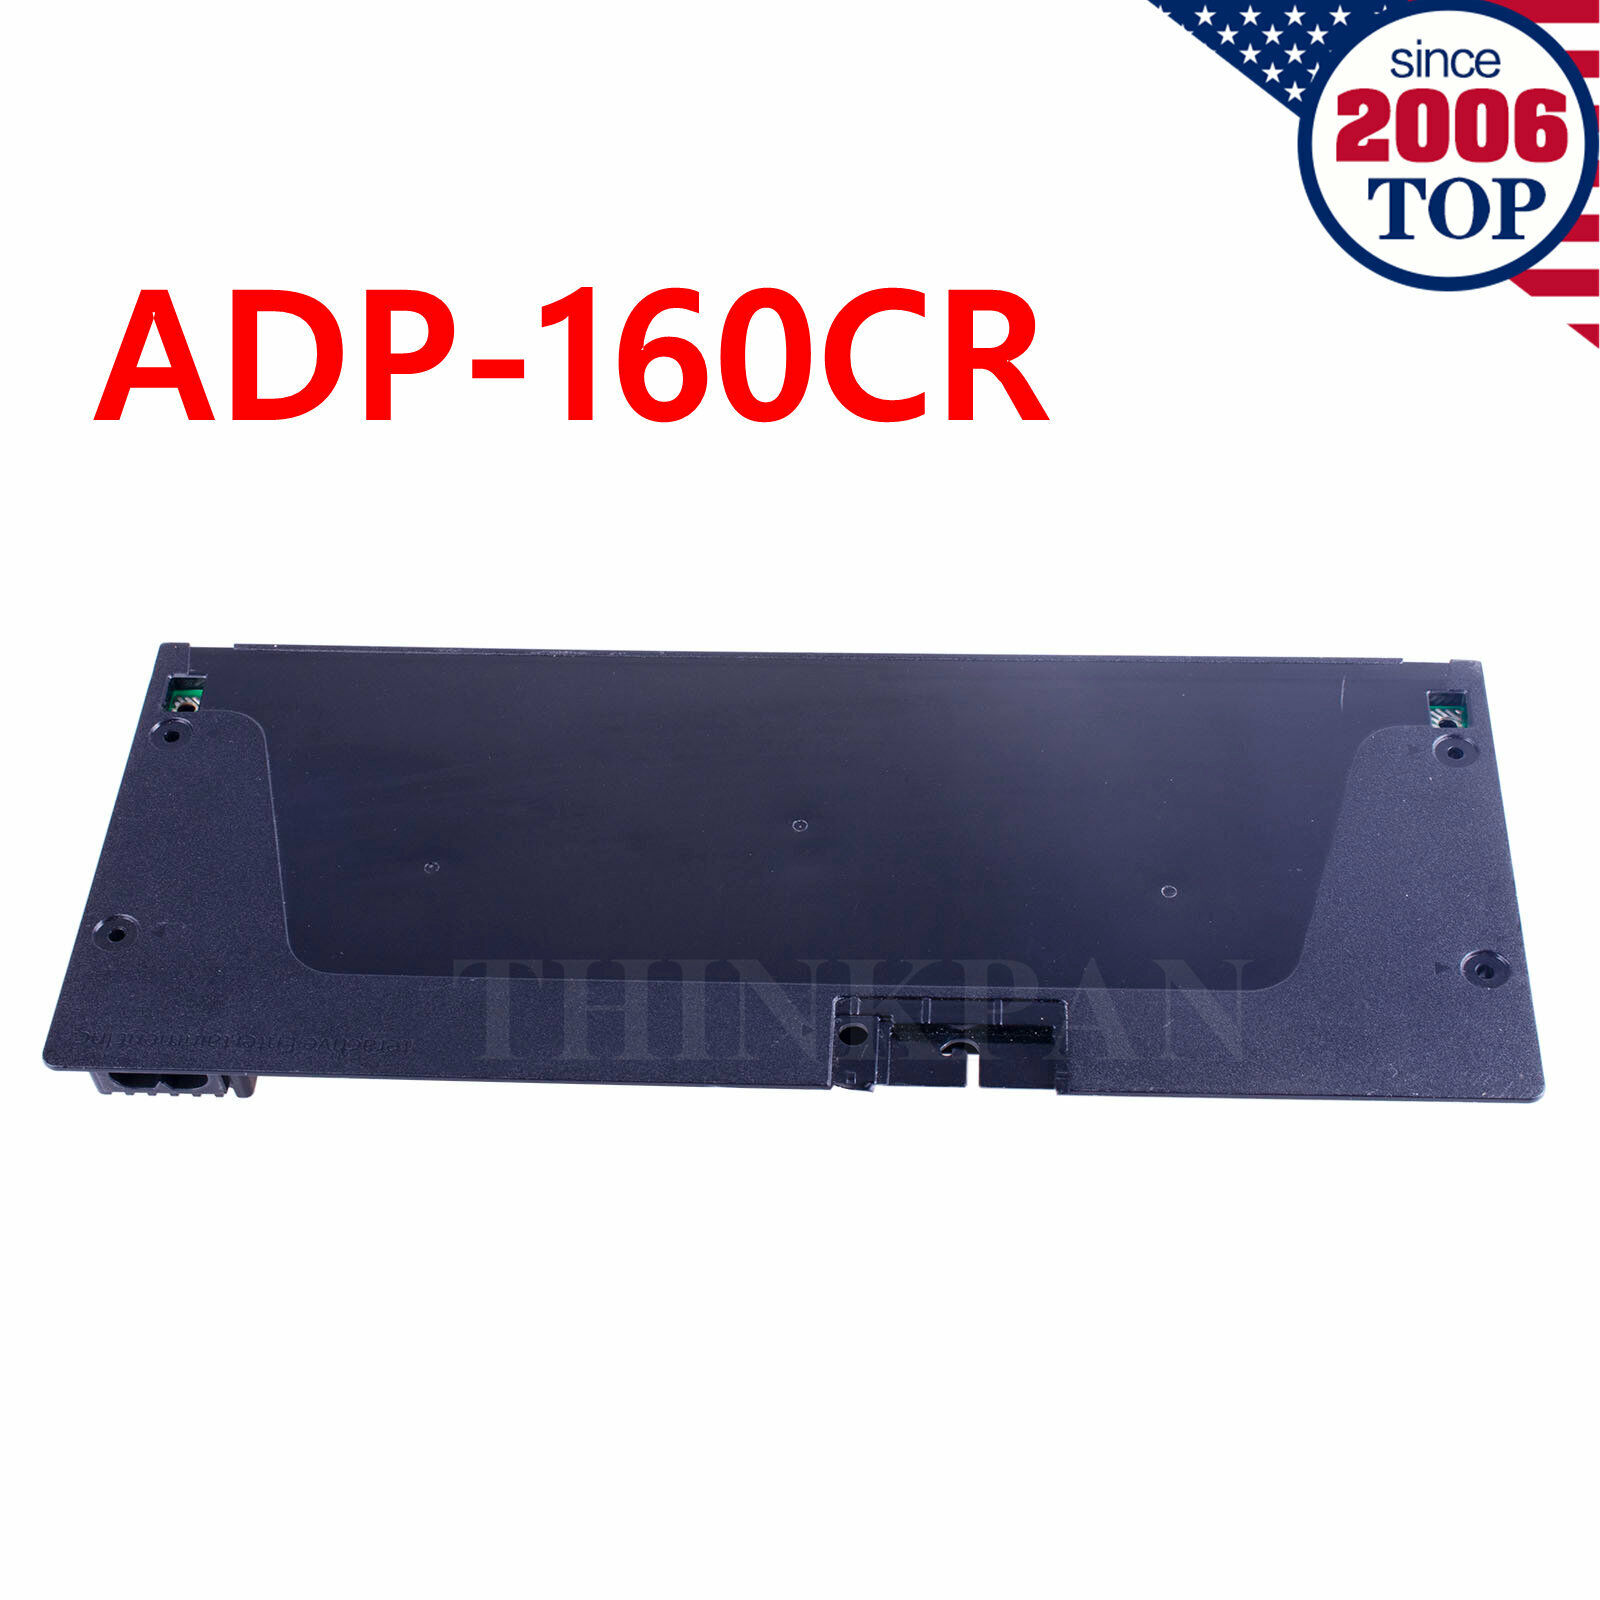 SONY Original Power Supply for PS4 Slim ADP-160CR N15-160P1A CUH-2015A